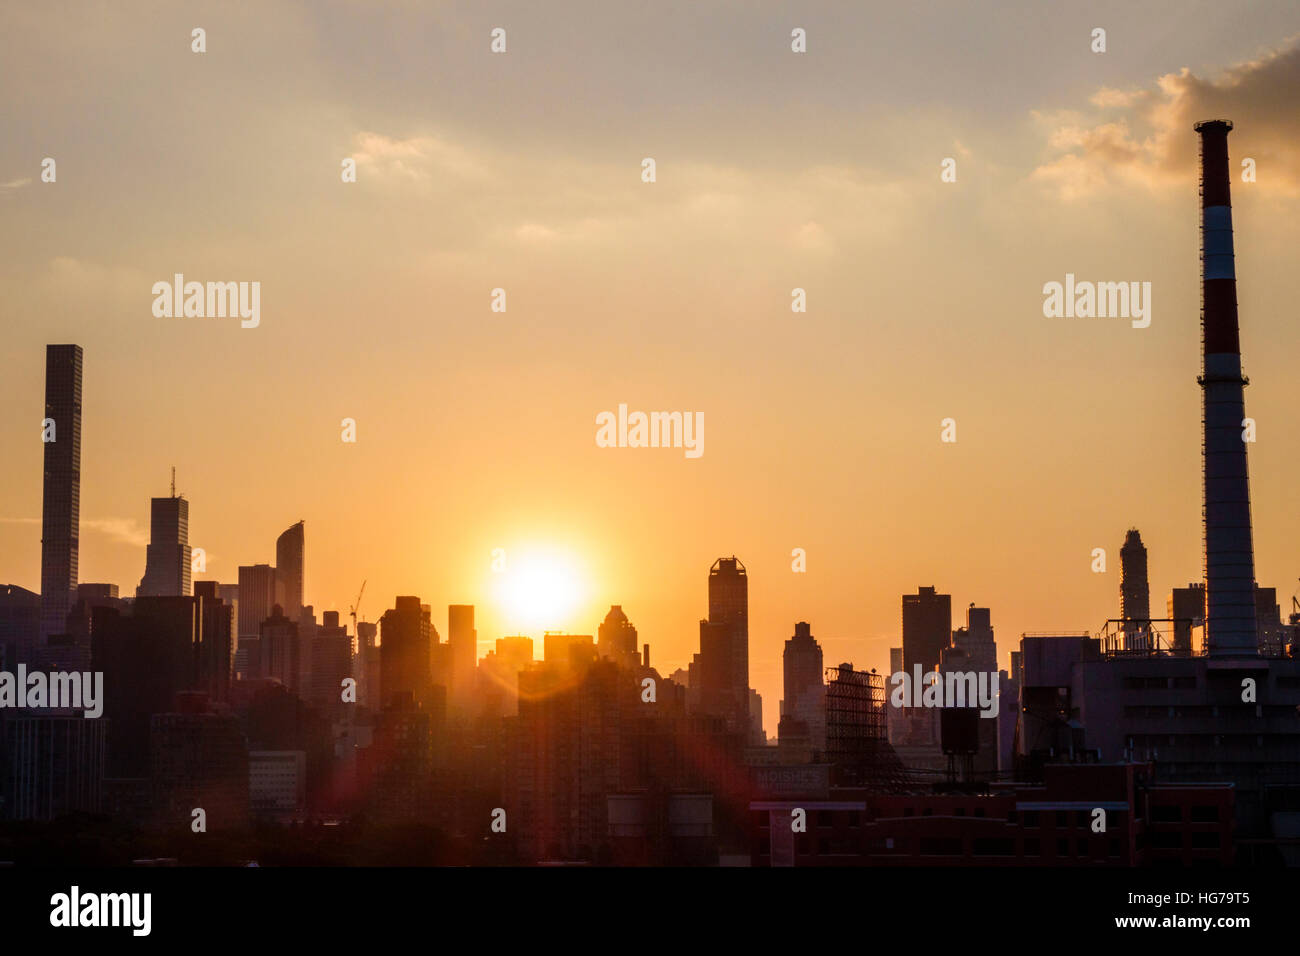 New York City,NY NYC Queens,Long Island City,view,Manhattan skyline,buildings,sunset,sunrays,orange,yellow,silhouette,chimney,NY160723094 Stock Photo